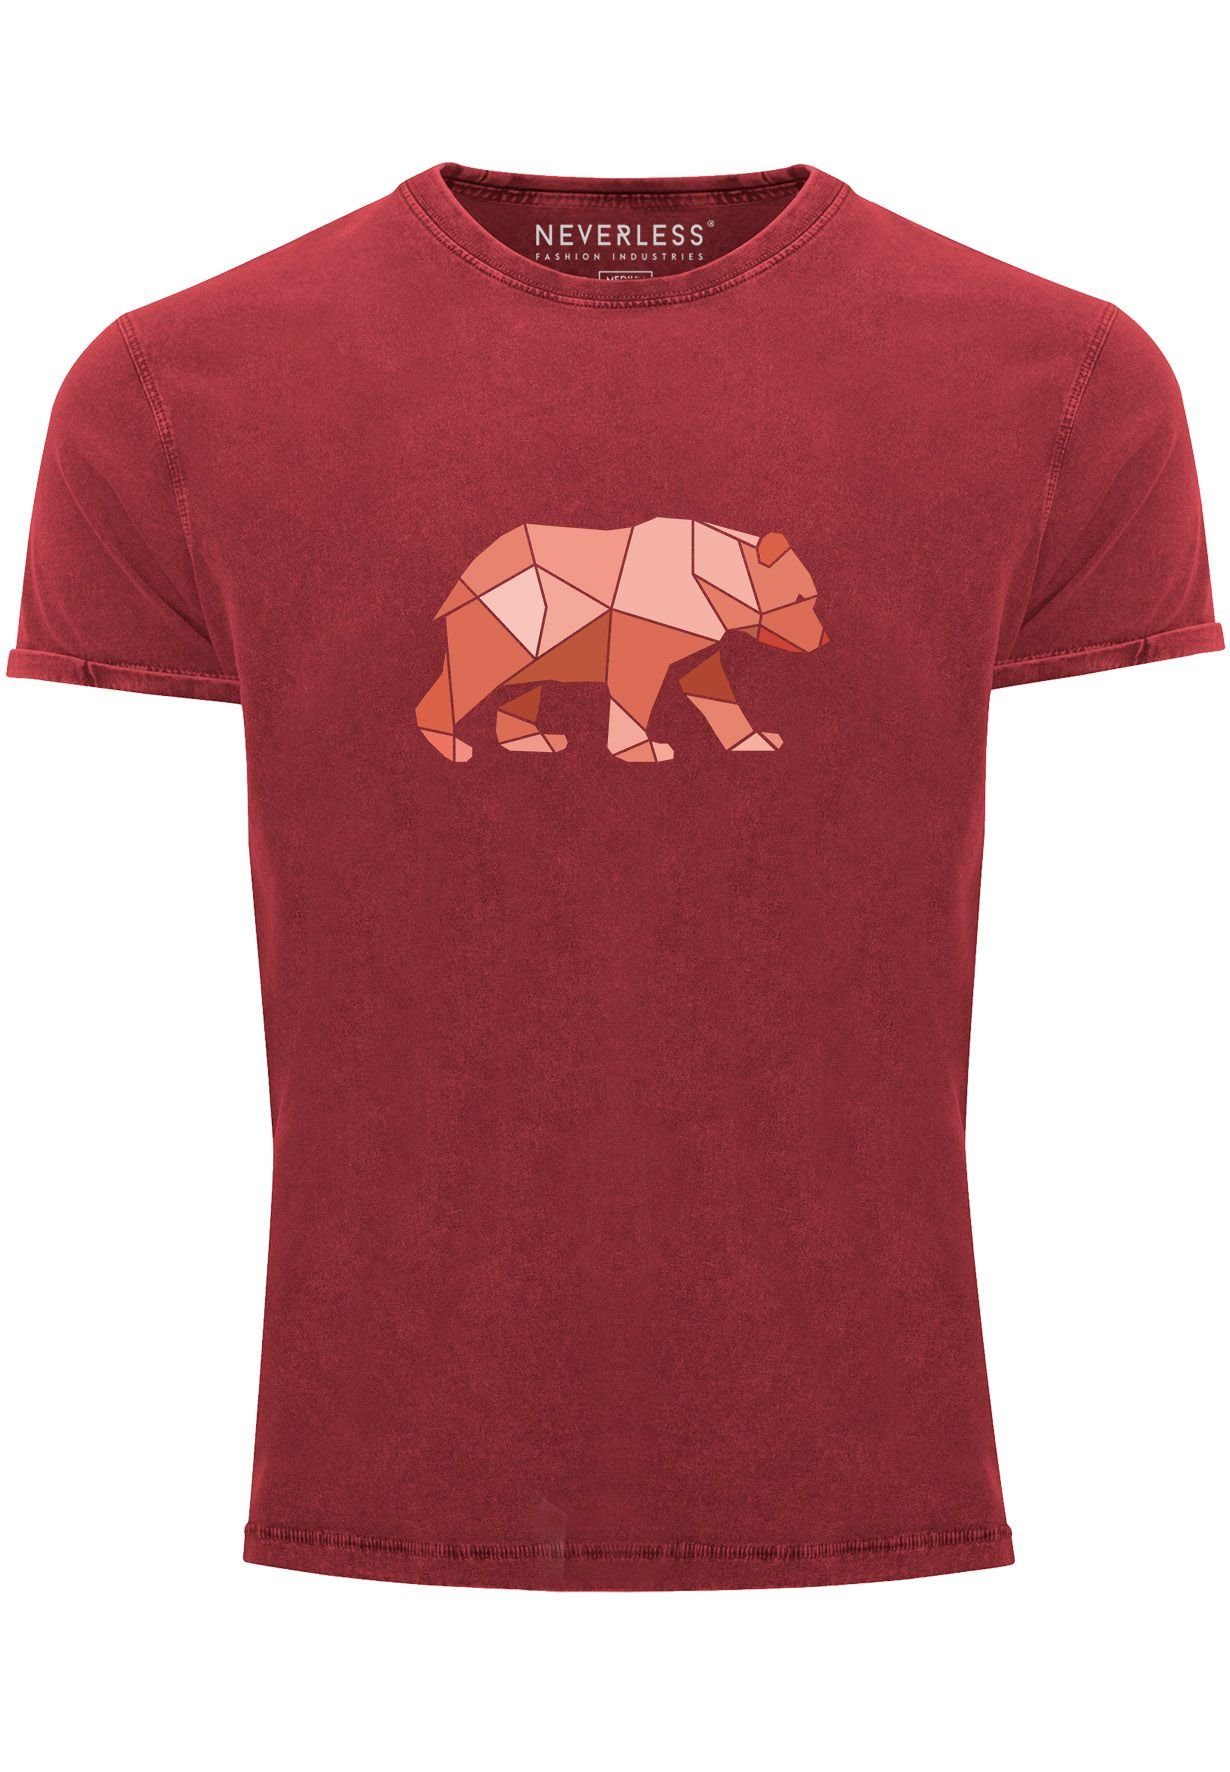 Neverless Print-Shirt Herren Vintage Shirt Polygon Grafik Bär Outdoor Motive Printshirt Natu mit Print rot